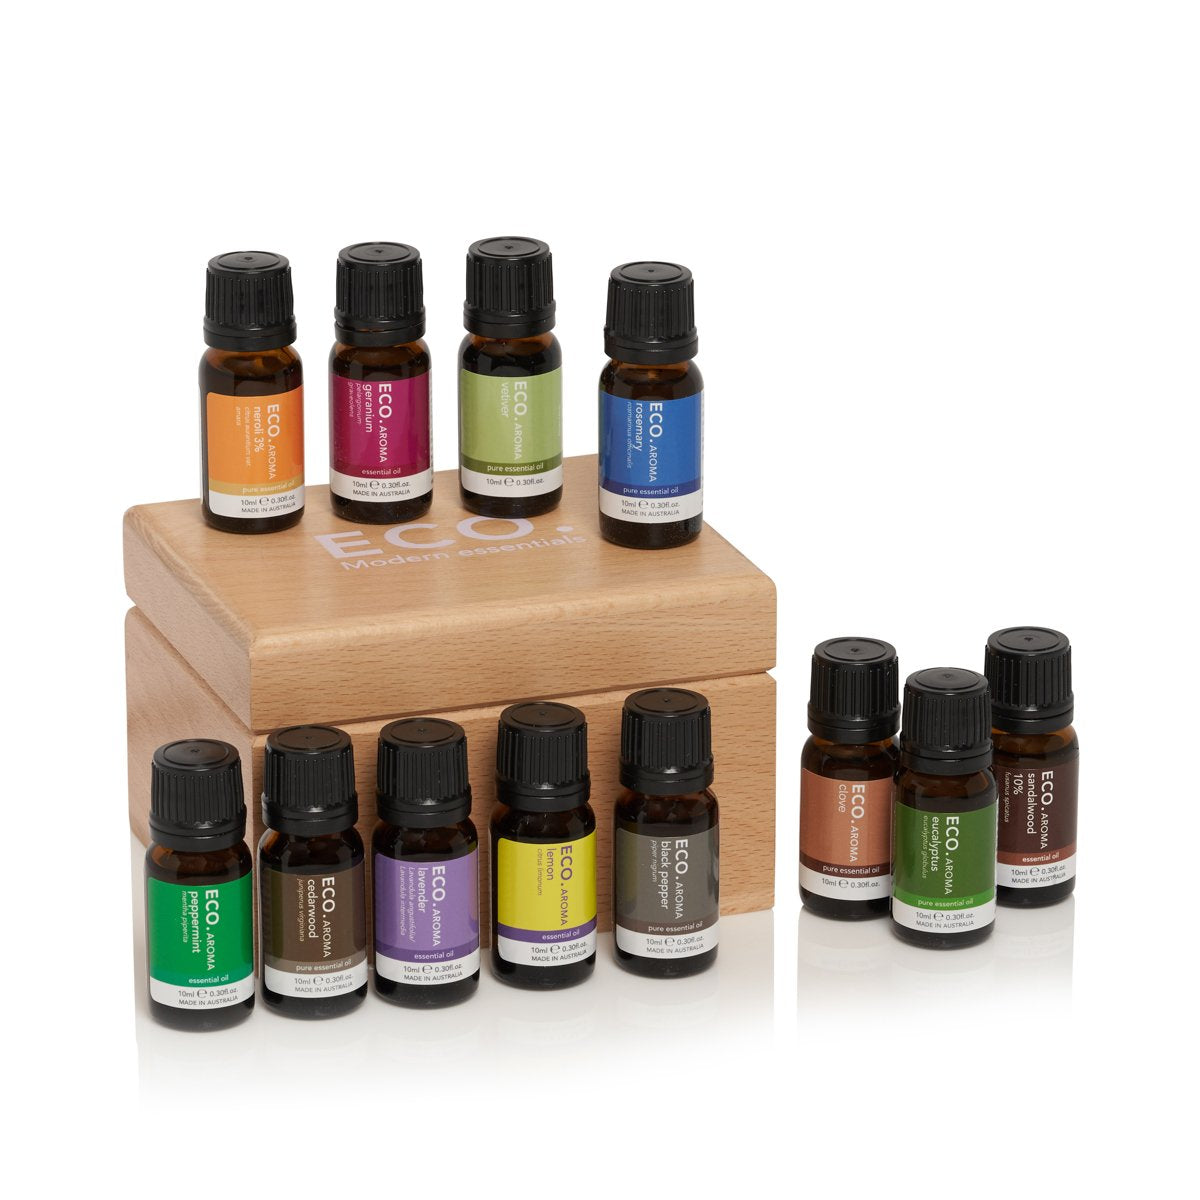 Aromatherapist Essentials Box - Banish